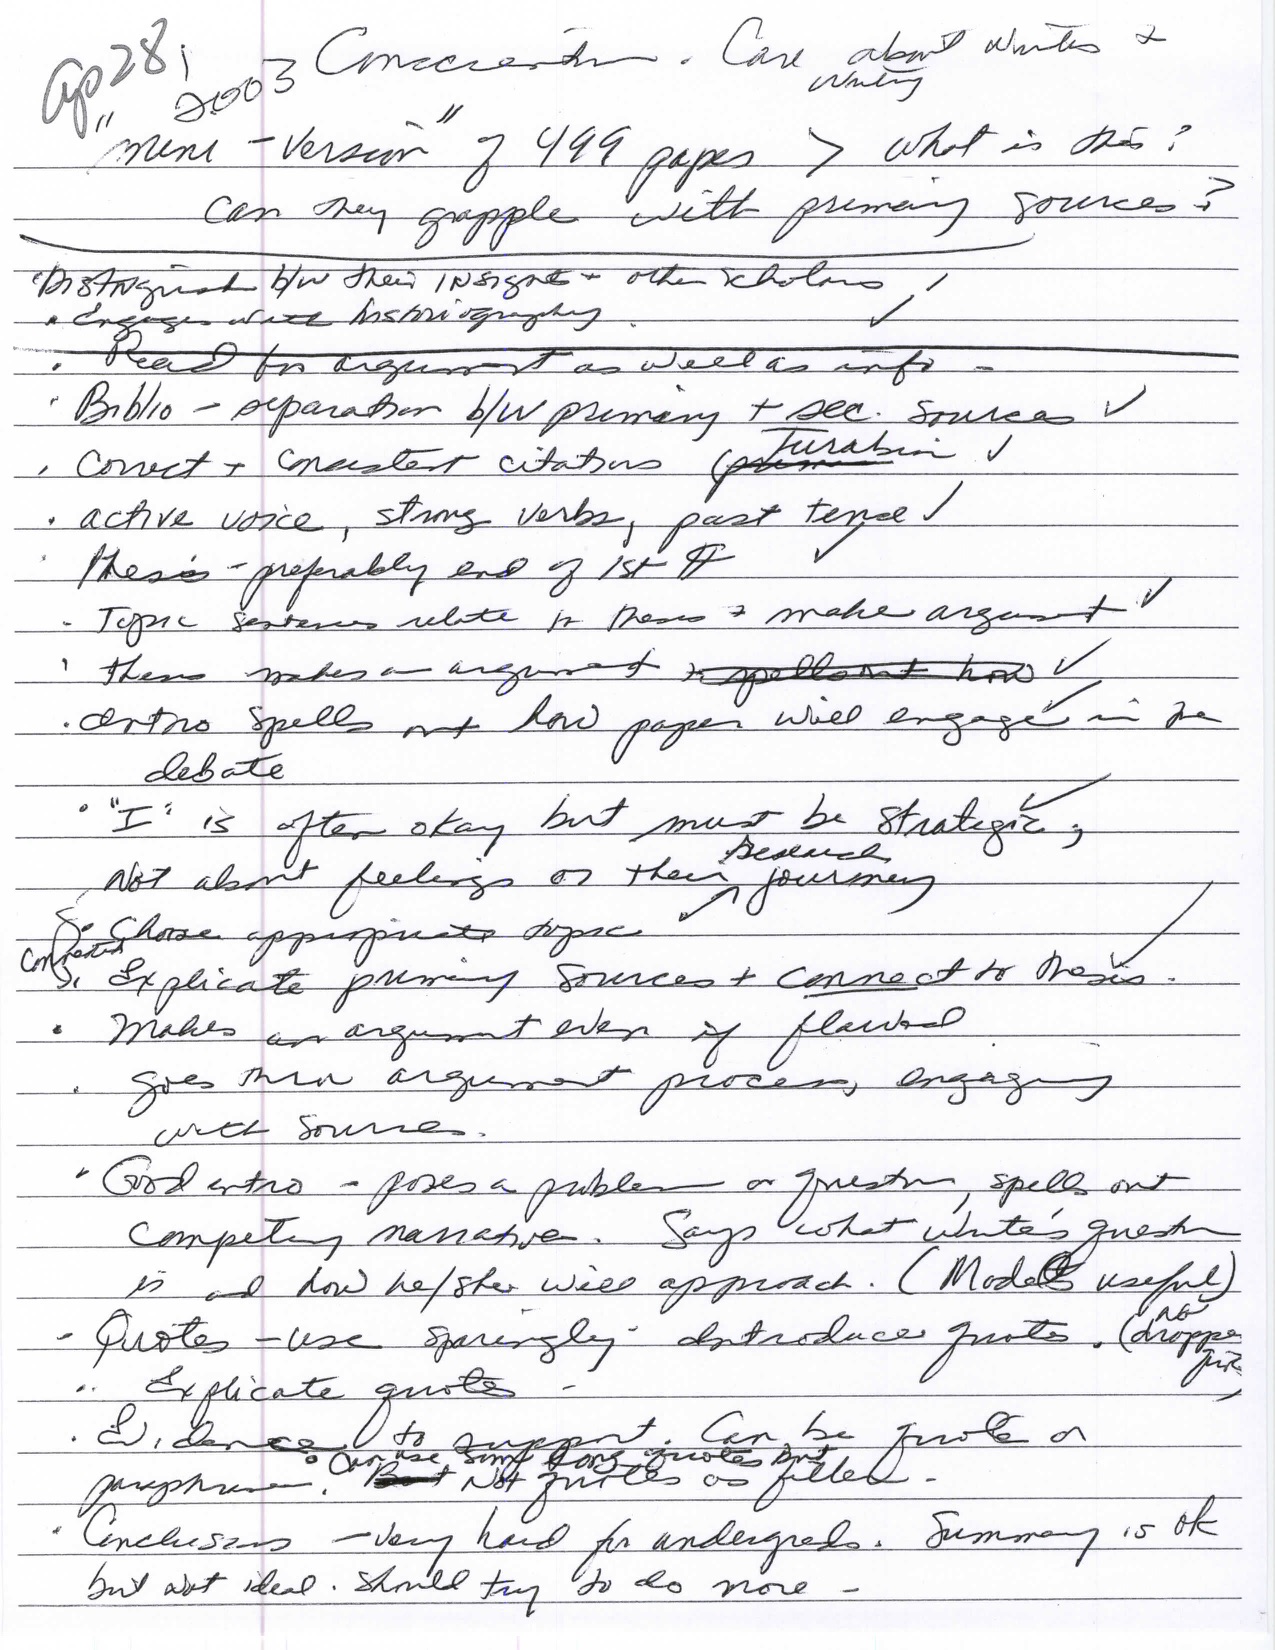 April 29, 2003 Handwritten note